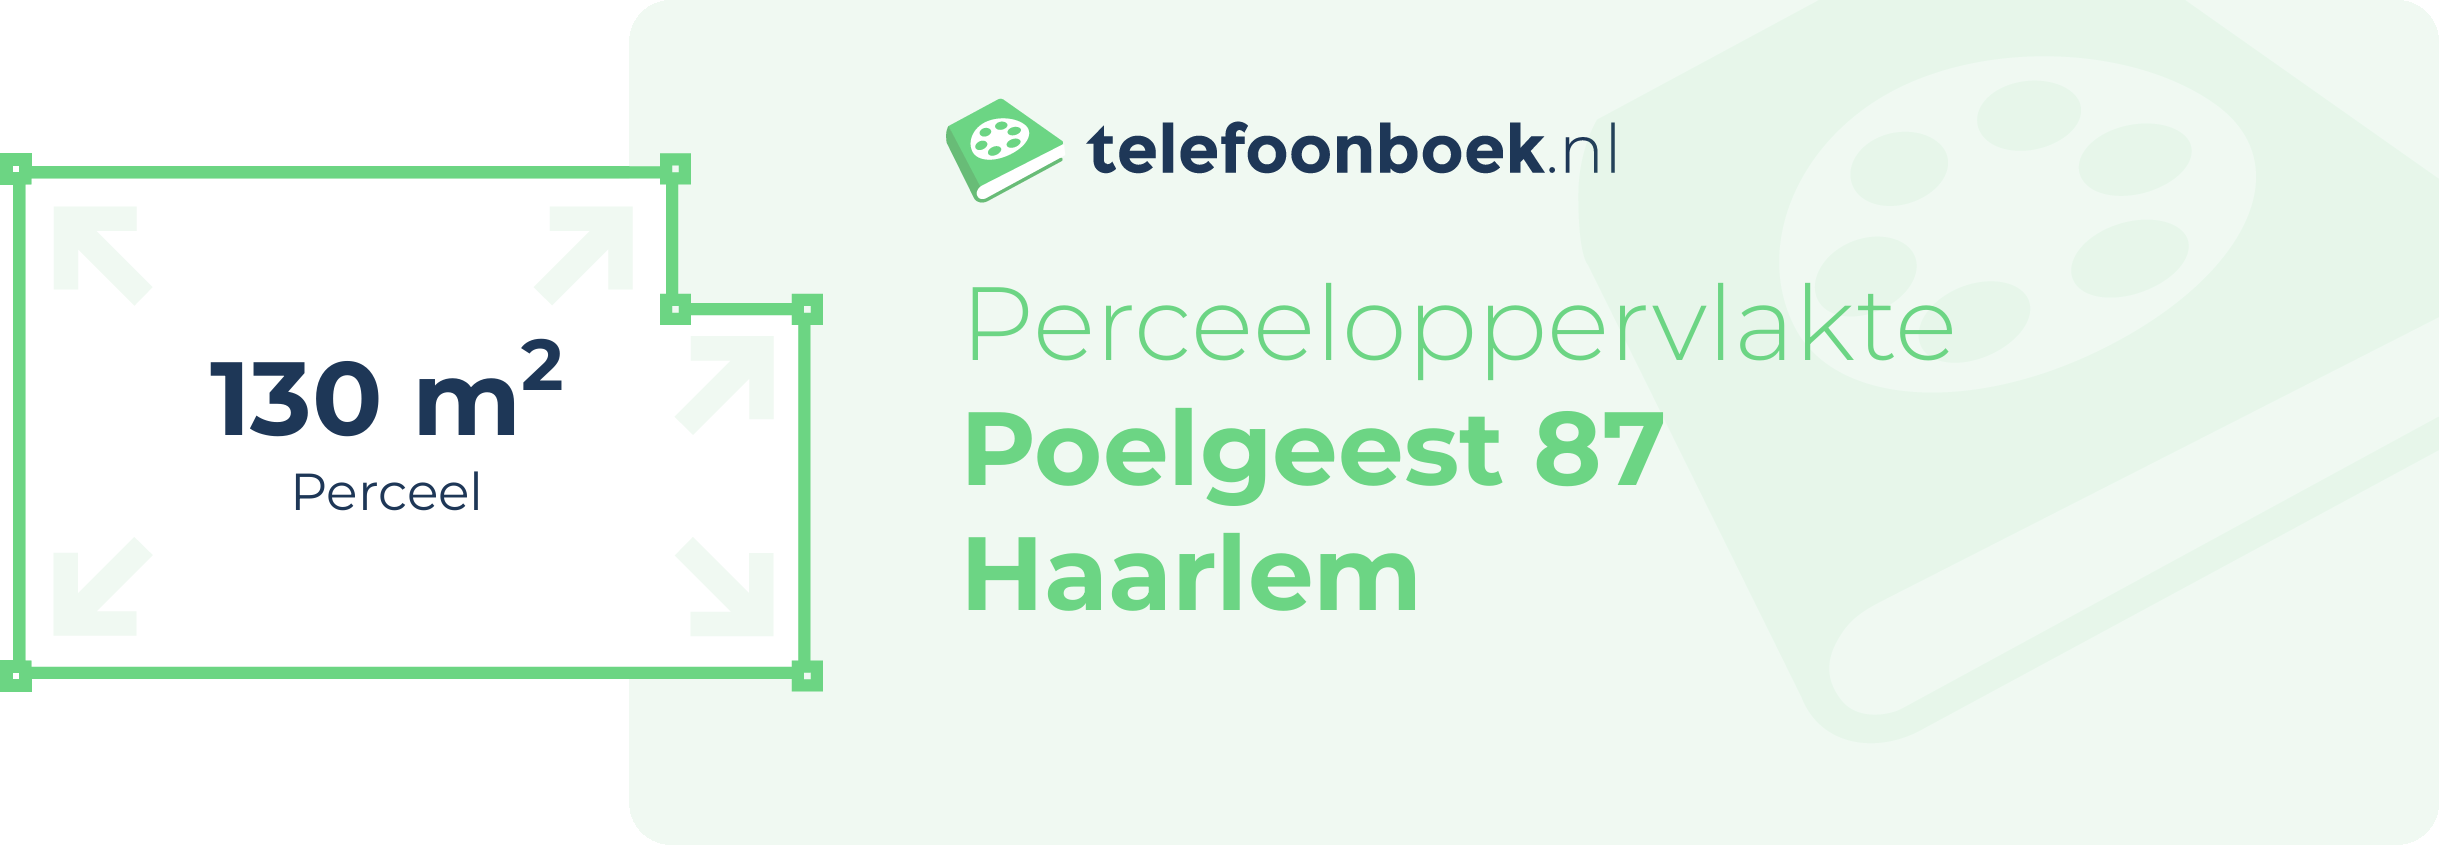 Perceeloppervlakte Poelgeest 87 Haarlem